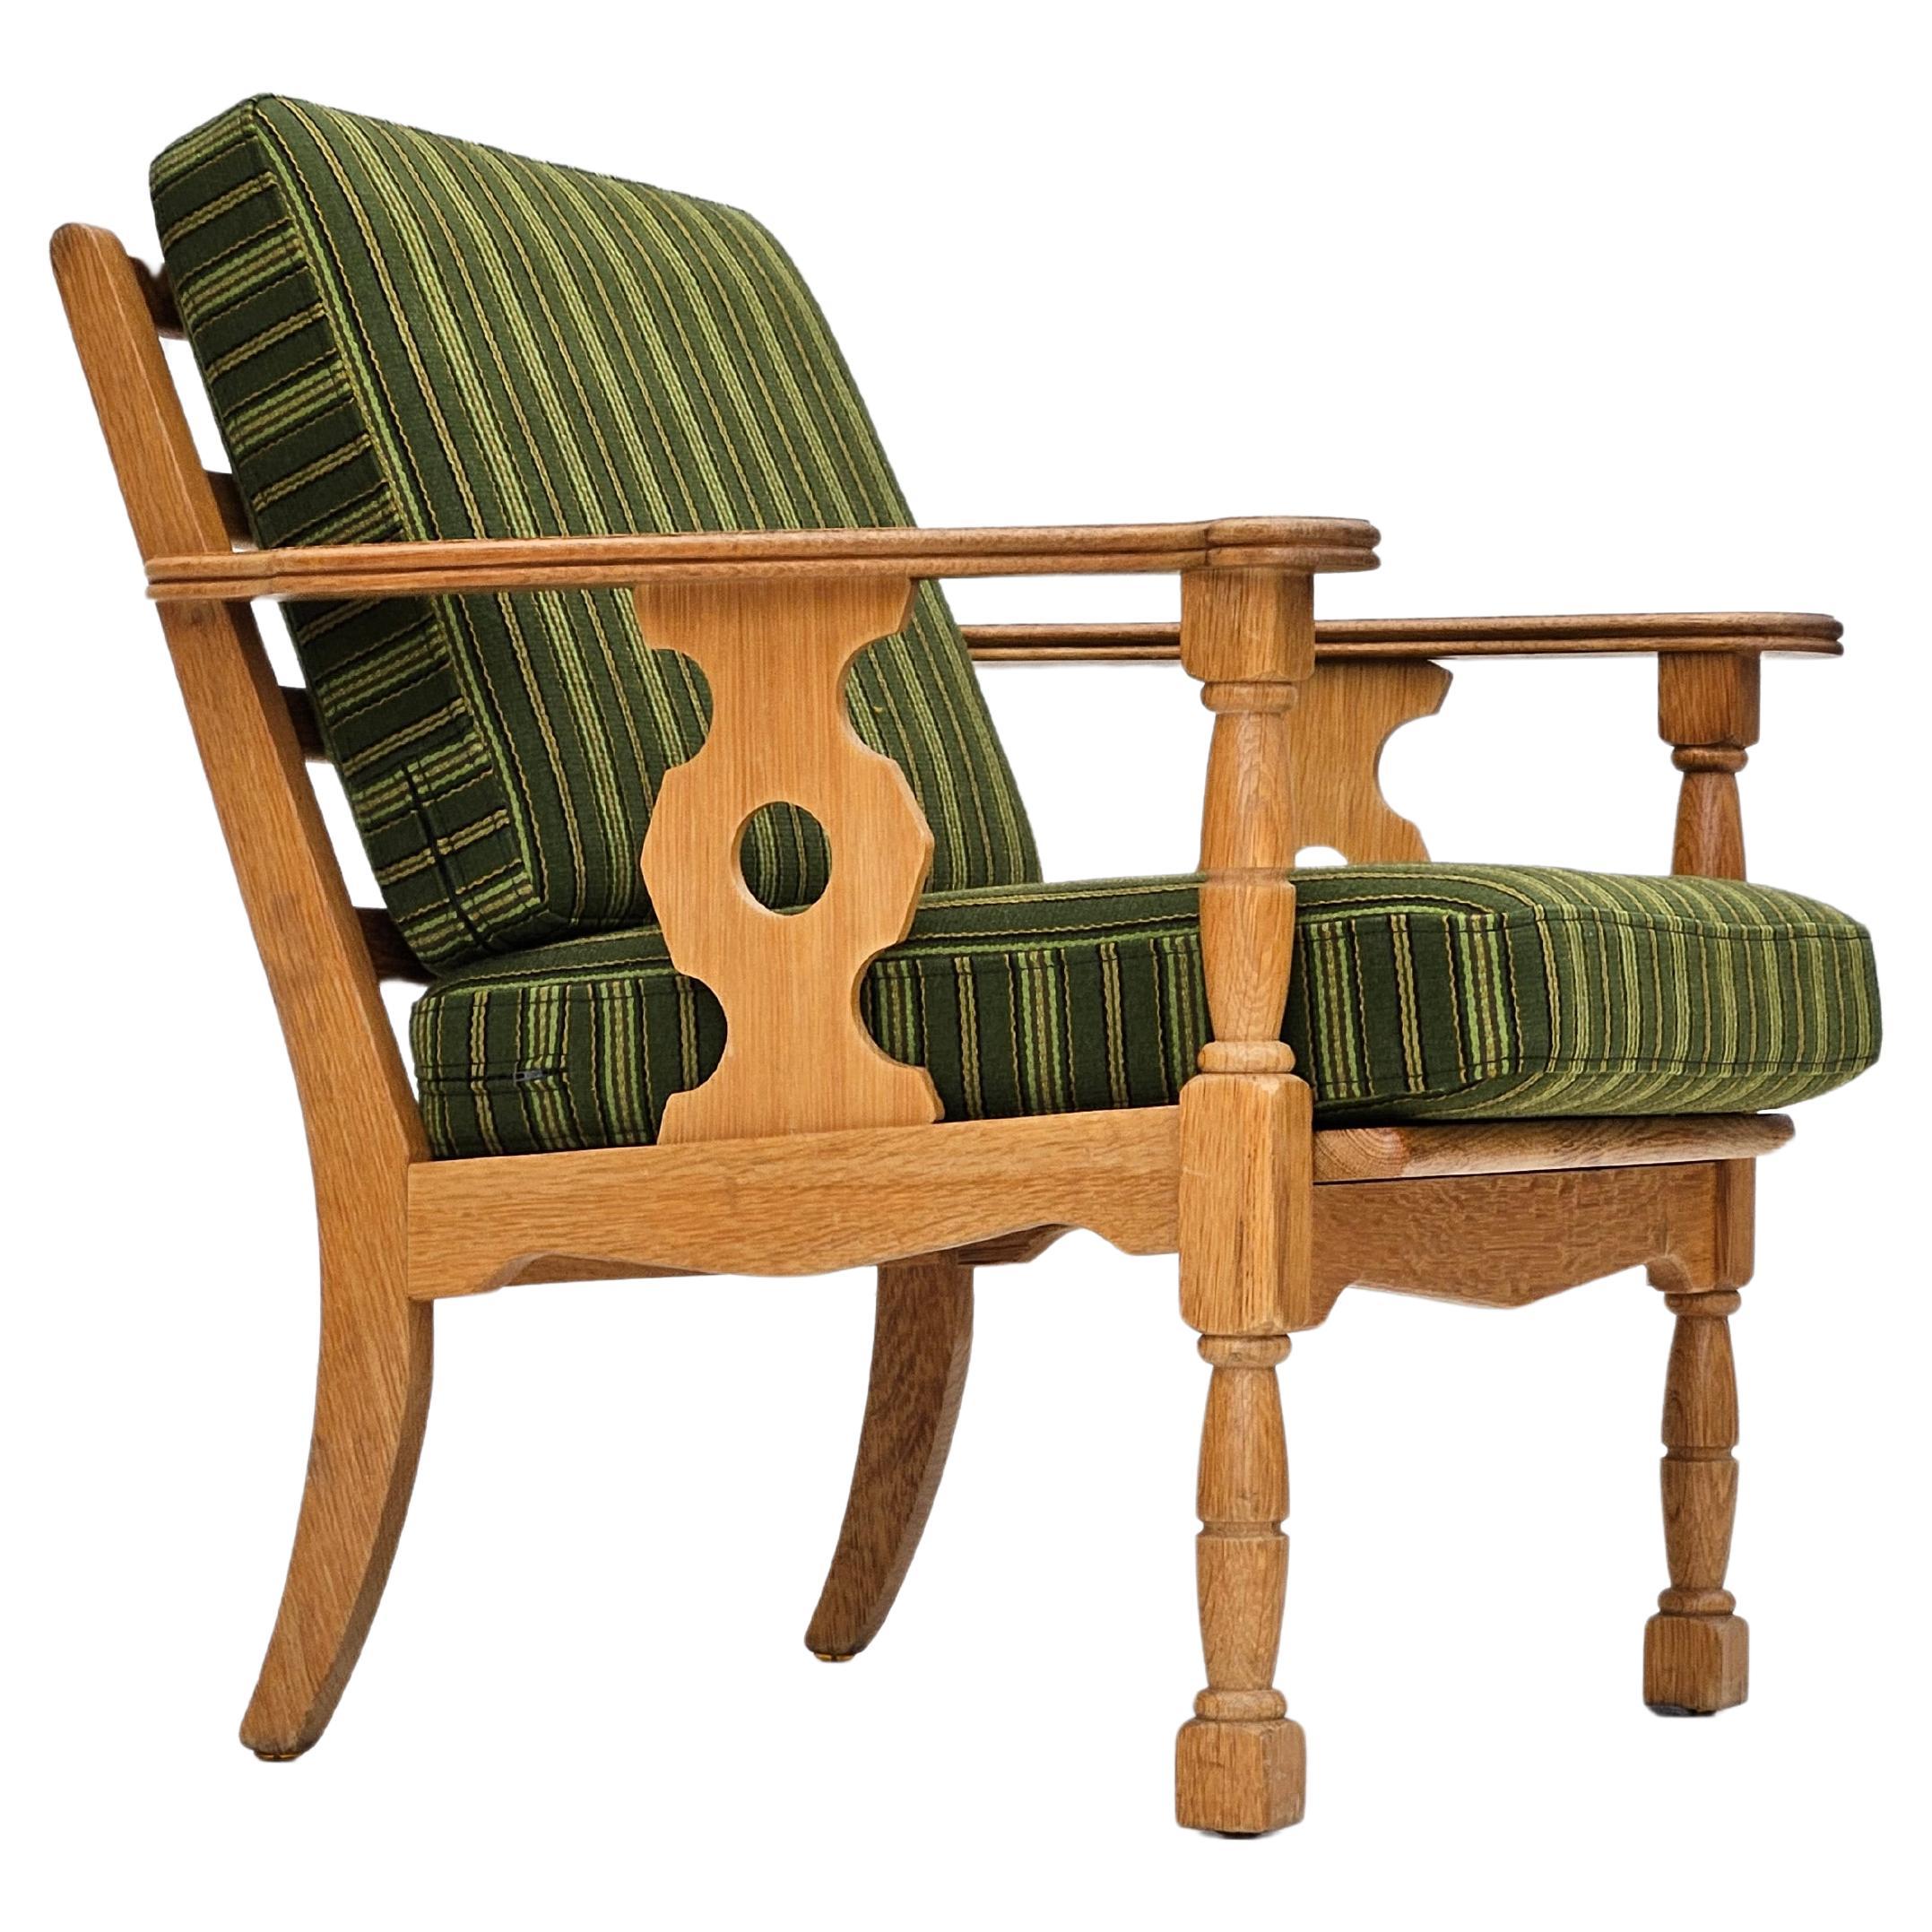 1970s, Danish design, oak wood armchair in furniture wool, original condition.